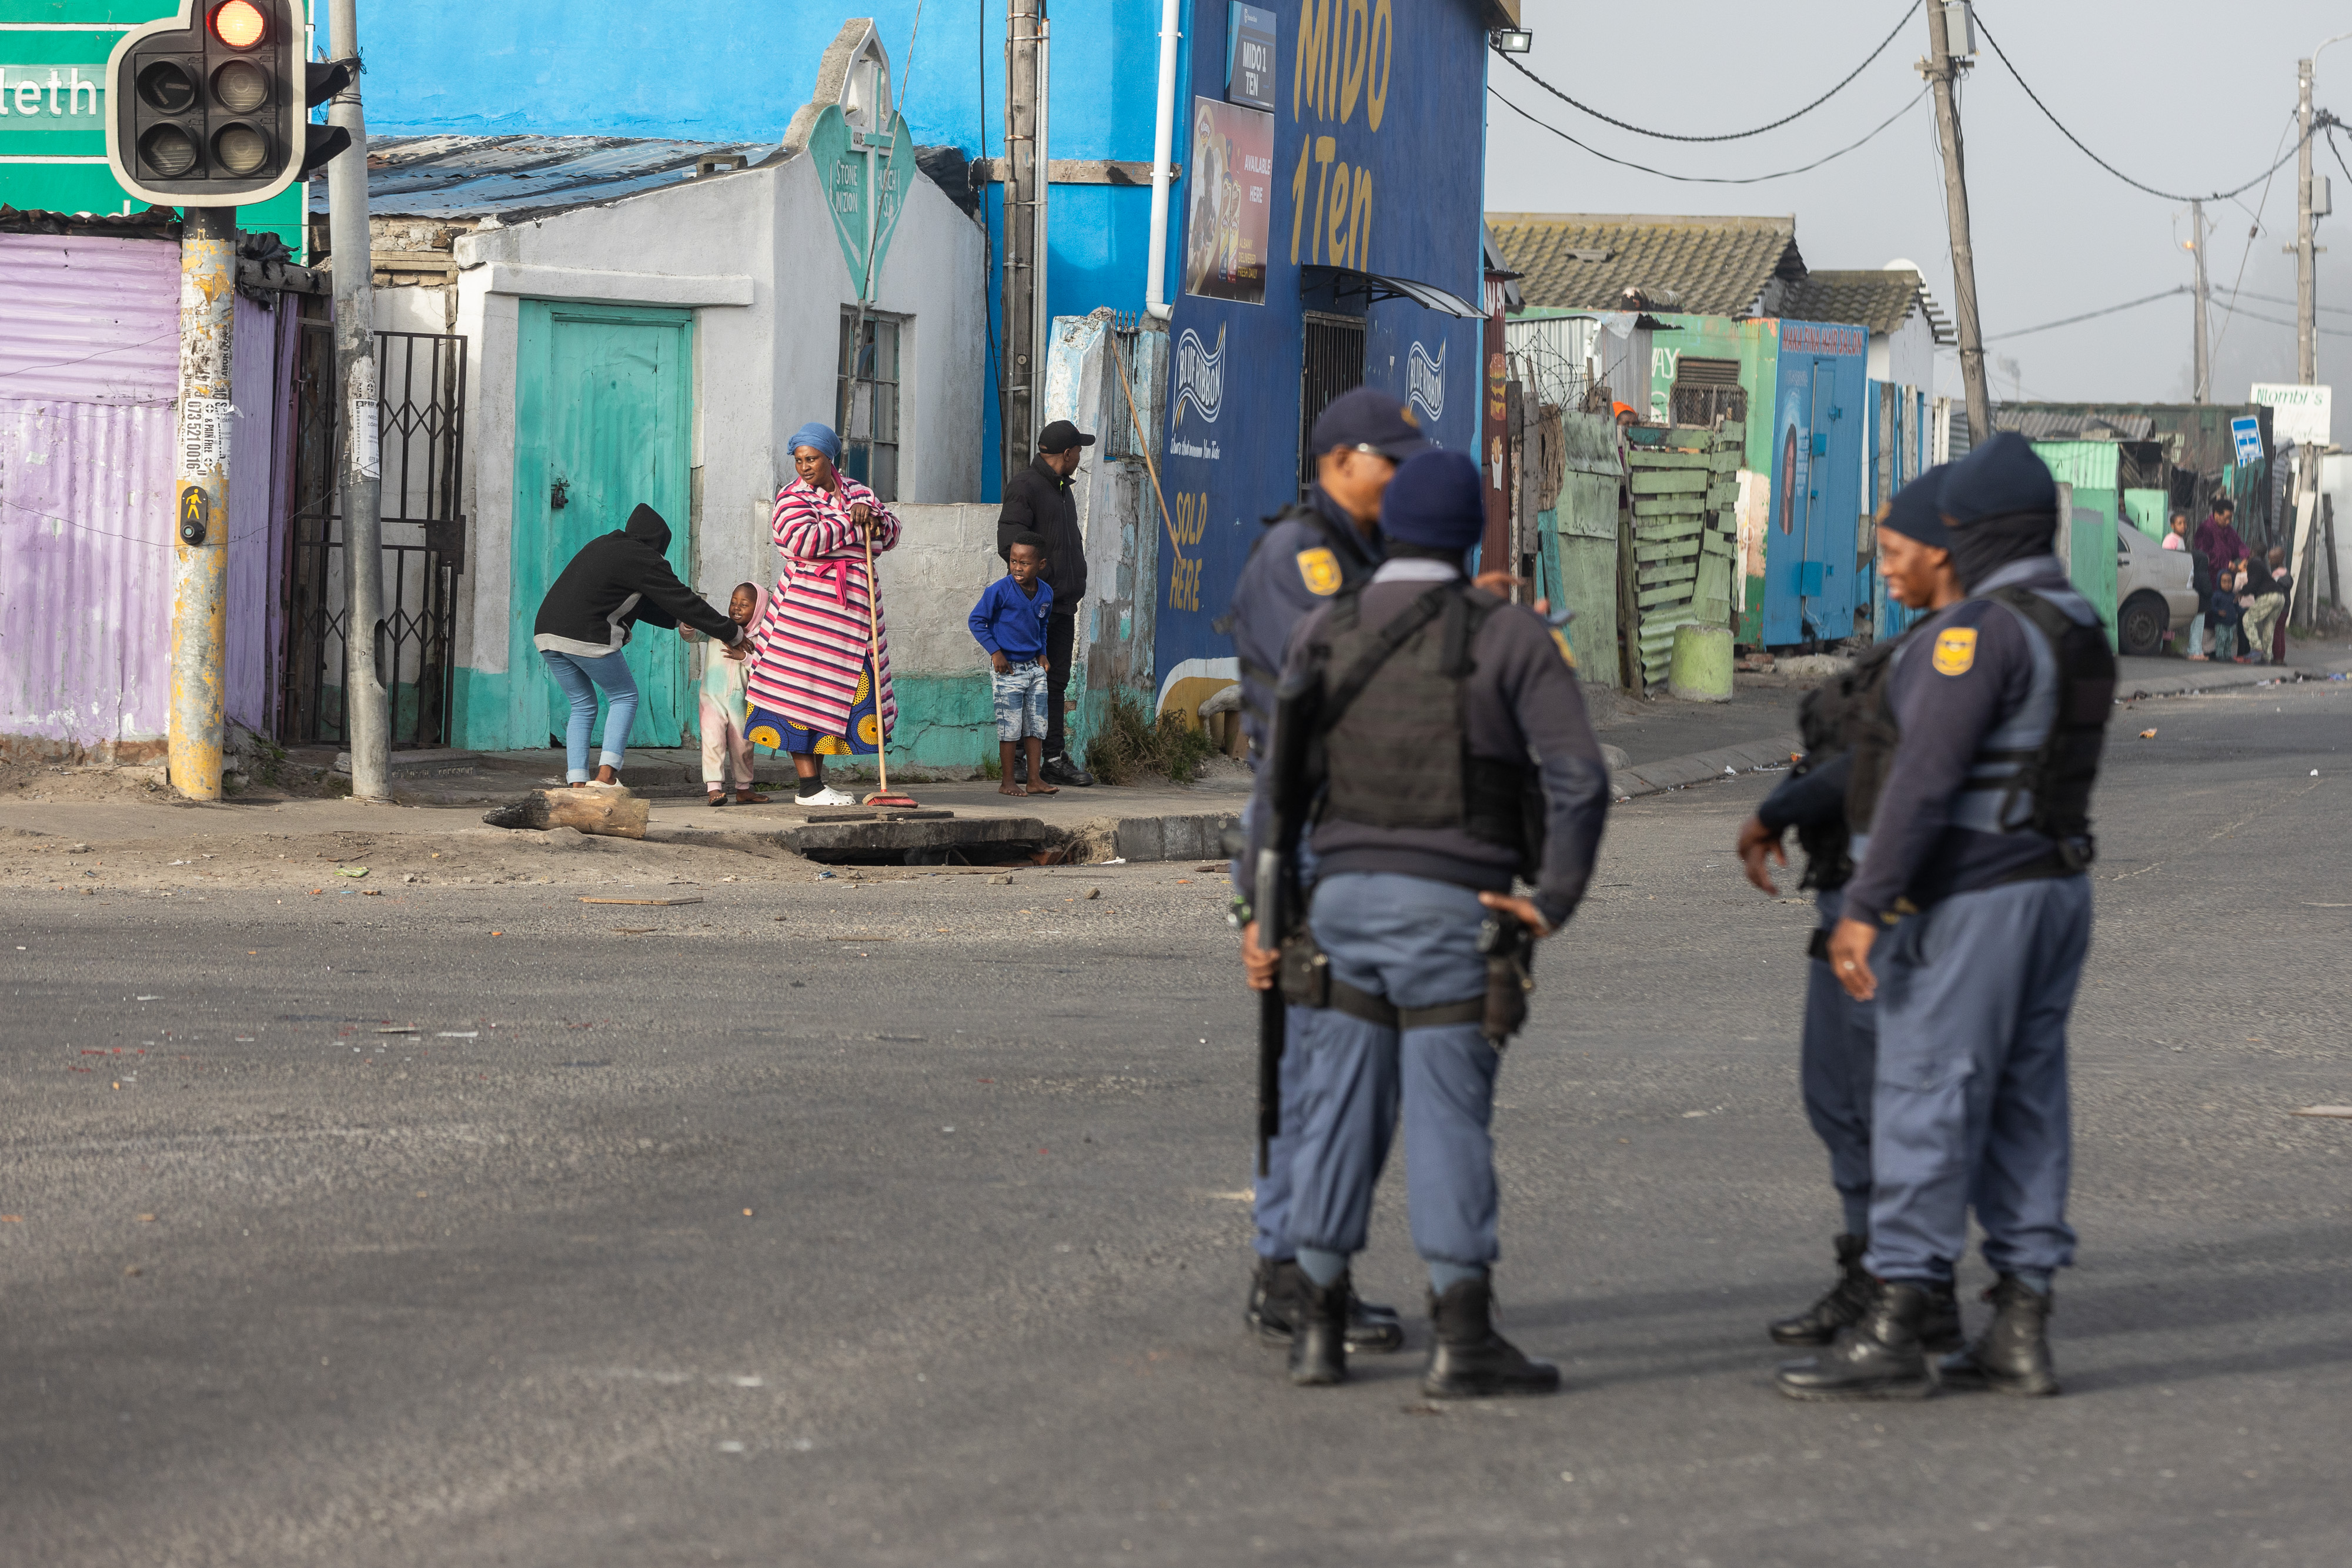 taxi strike, police in Crossroads